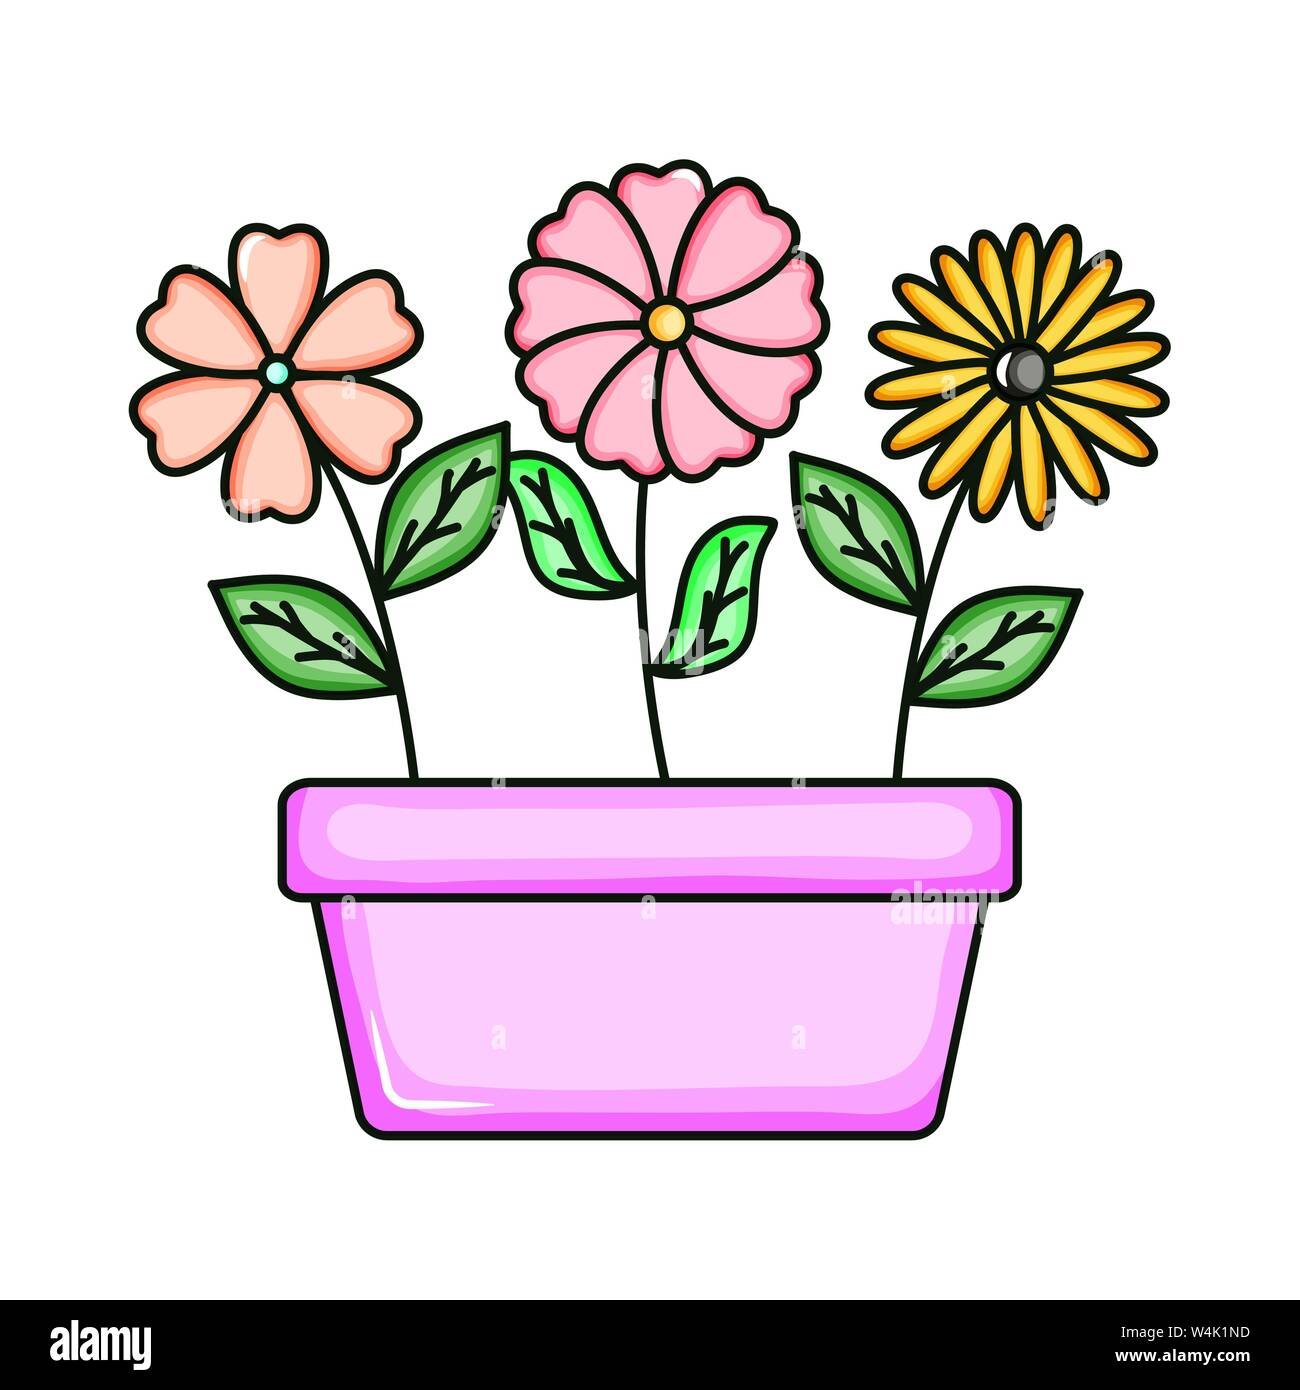 Flower Pot Drawing Stock Photos - 93,253 Images | Shutterstock